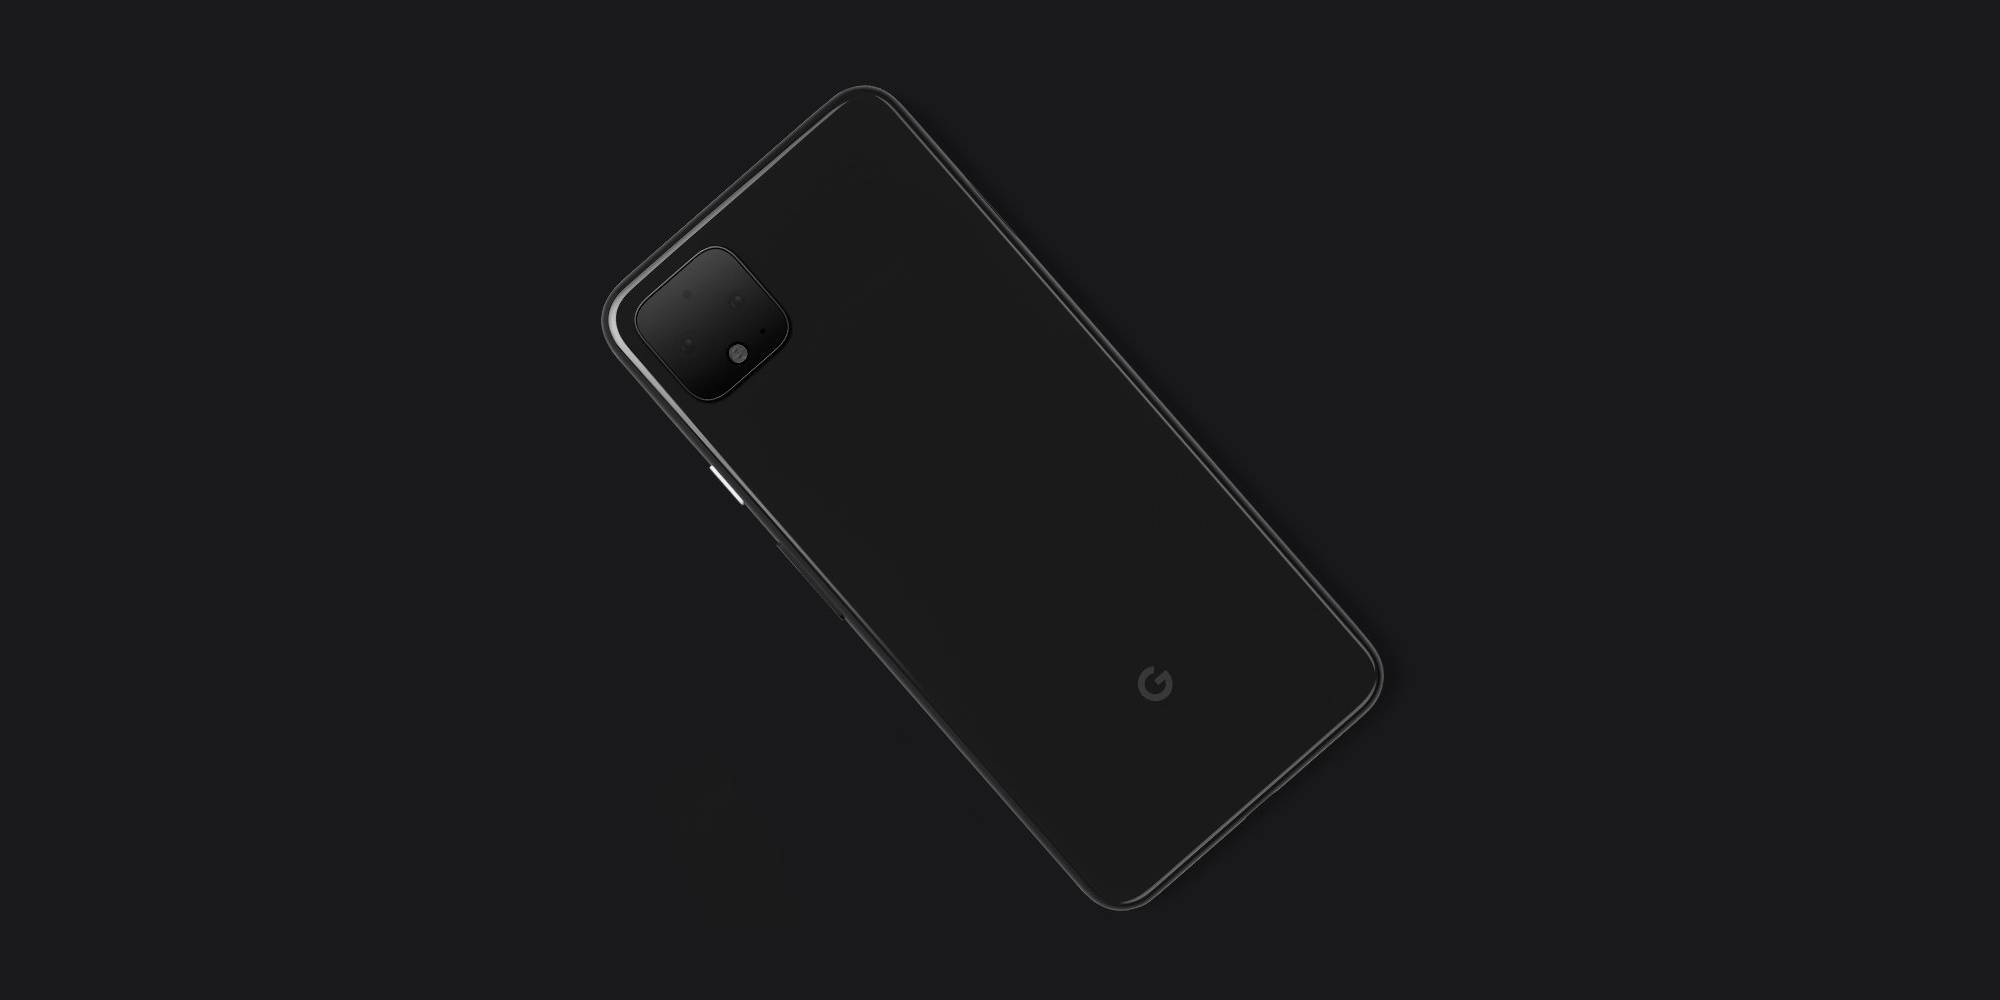 Google Pixel 4 ikinci kamera özellikleri